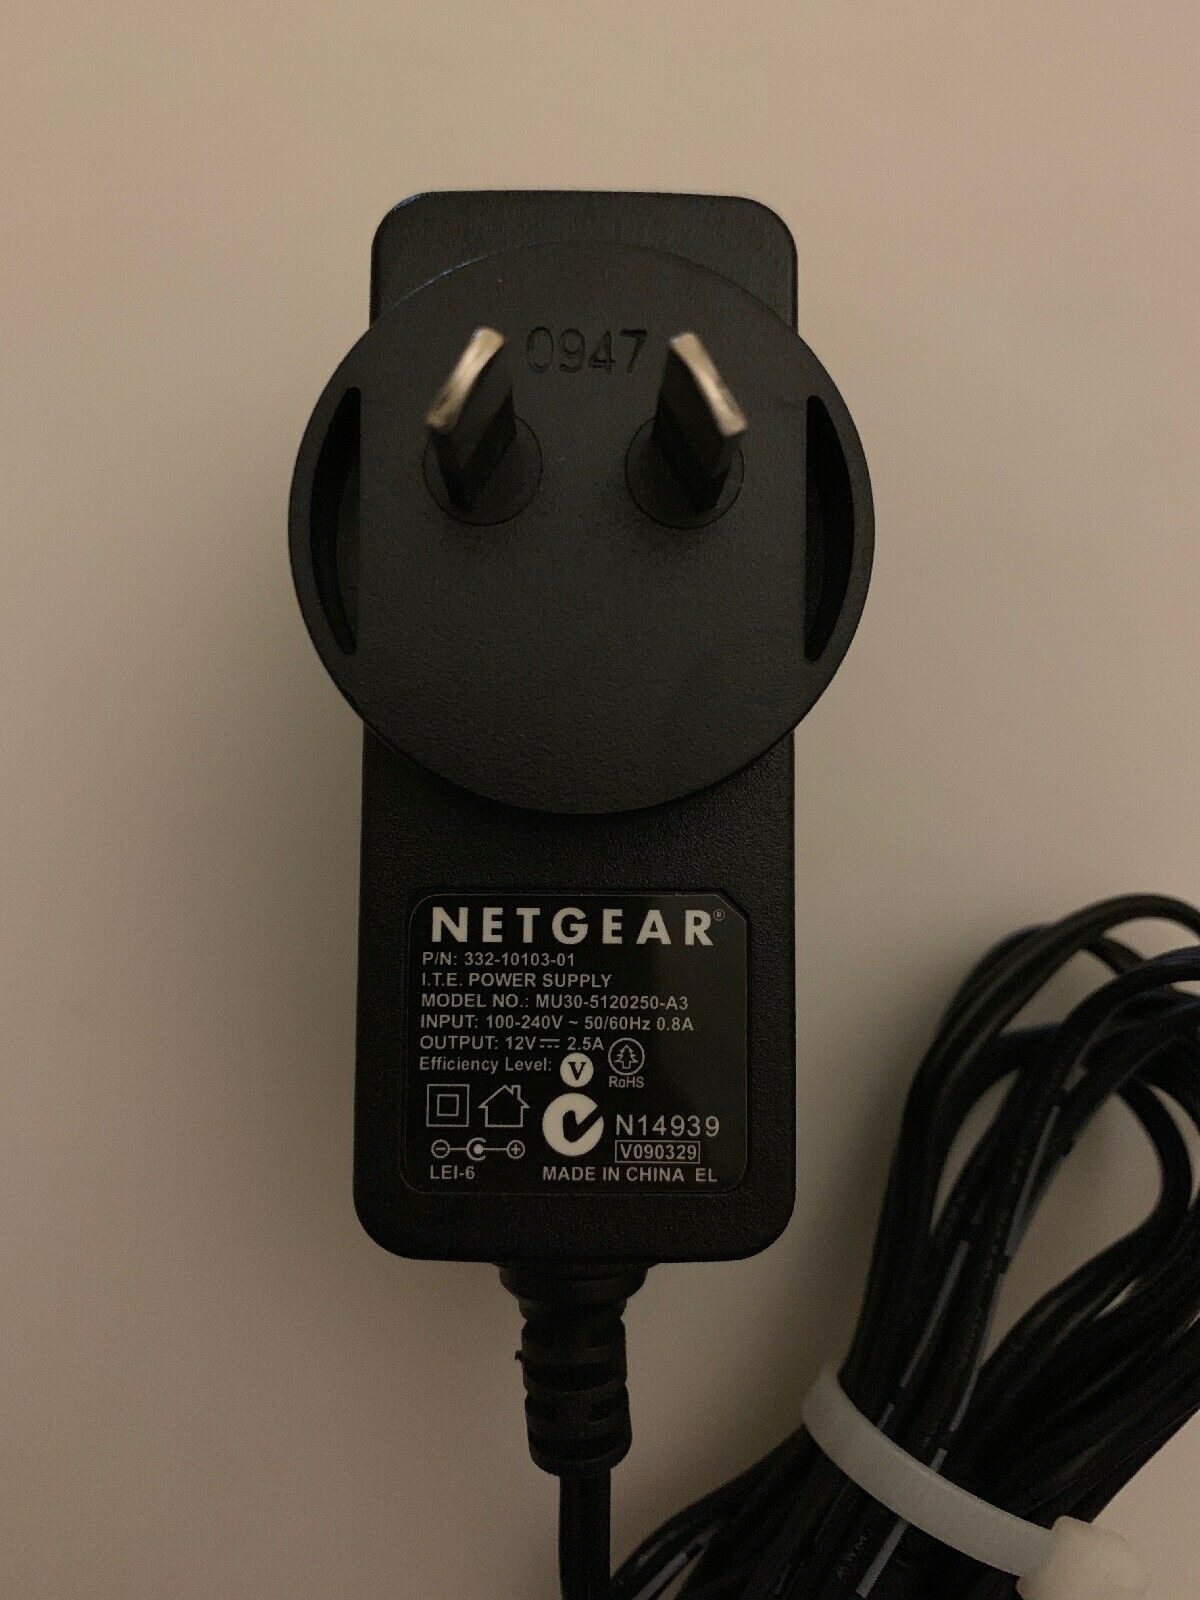 New Netgear MU30-5120250 332-10103-01 Power Supply 12V 2.5A AC Adapter AU PLUG